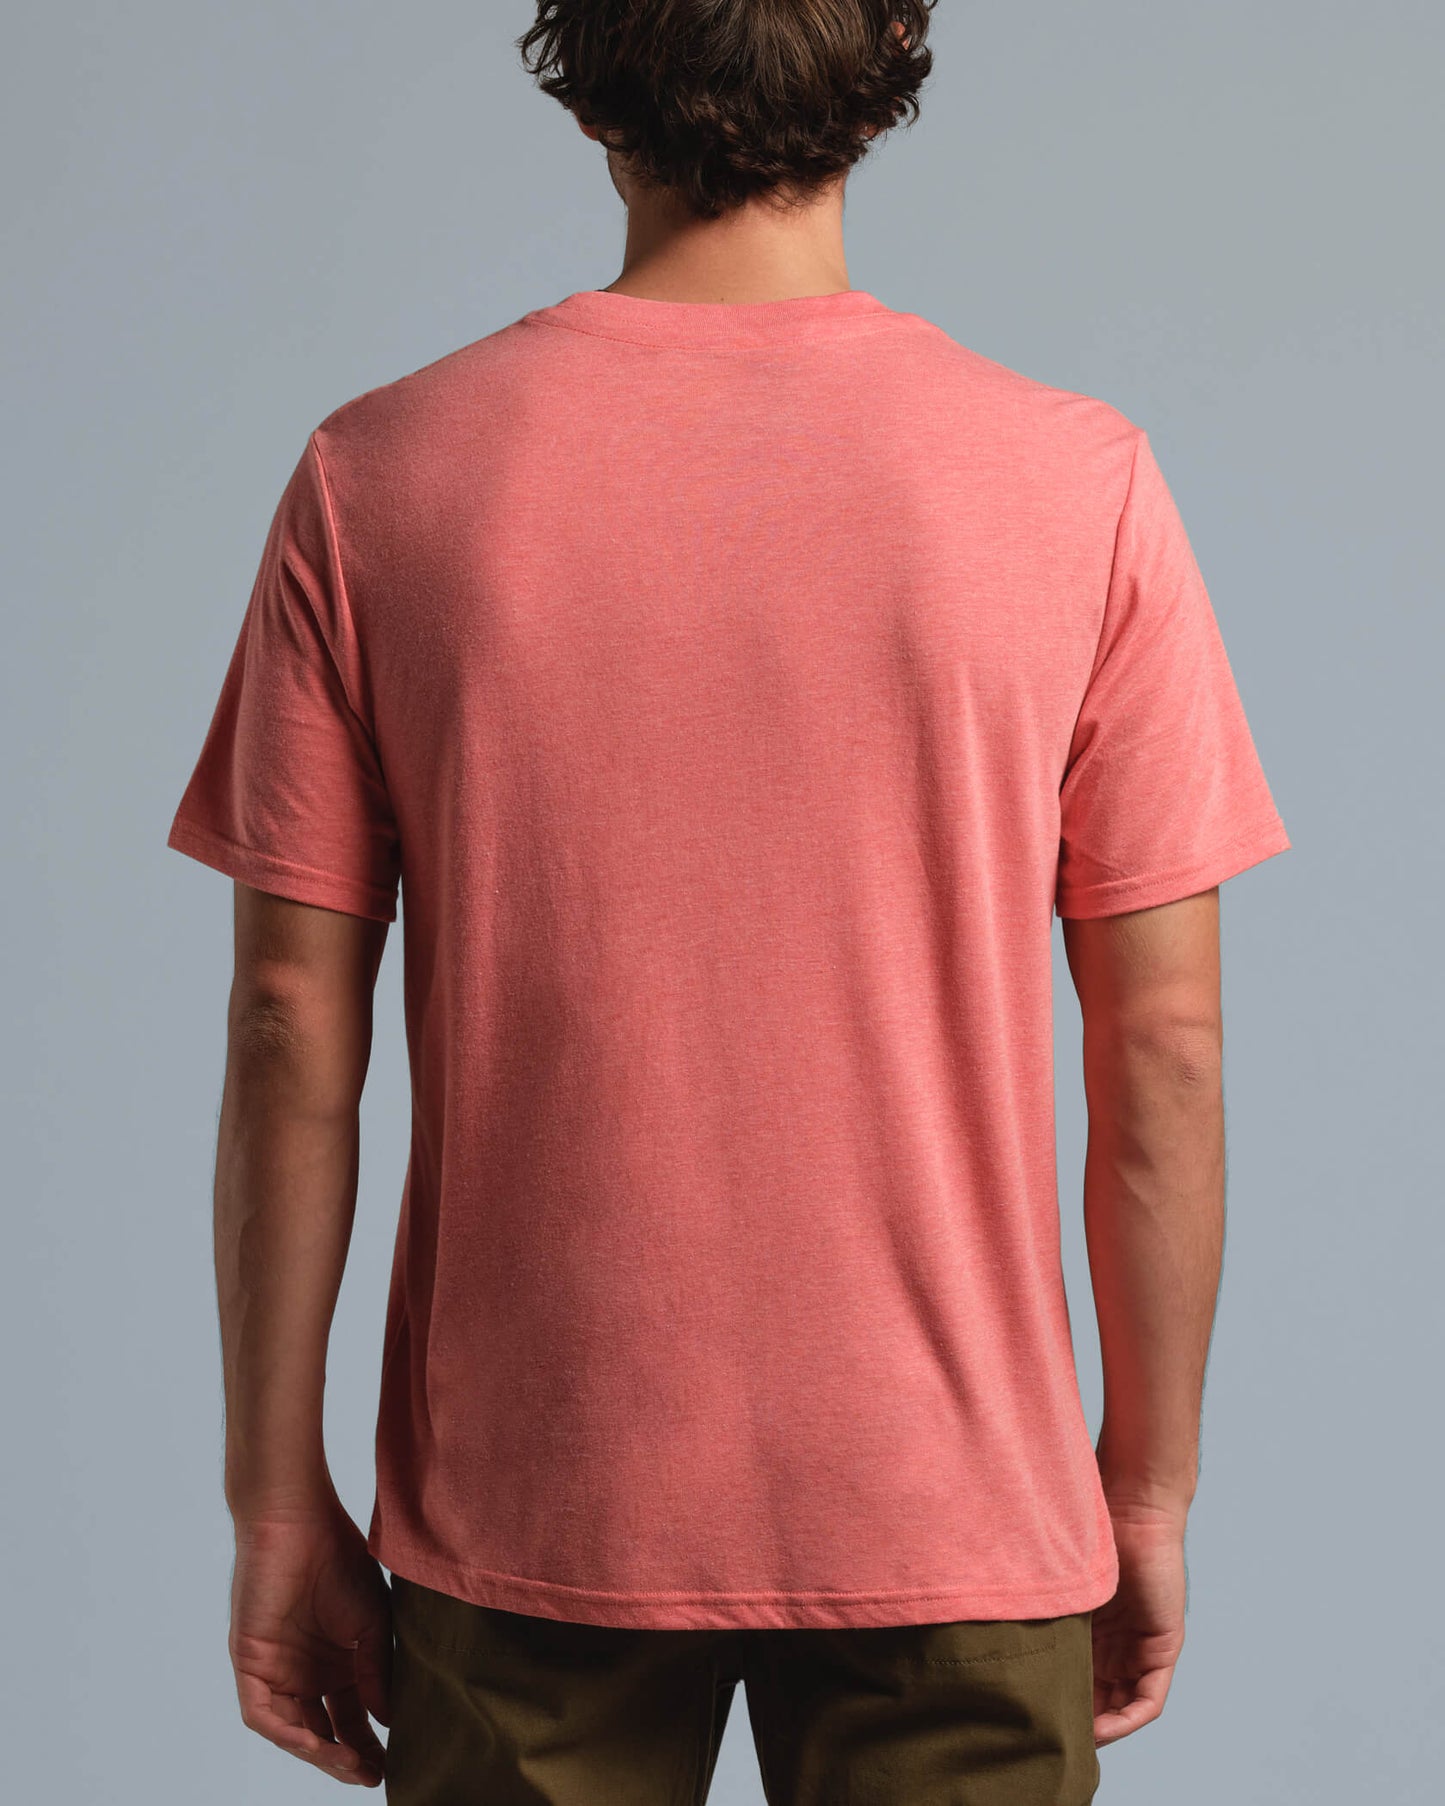 Origin SuperBlend T-Shirt |Lava / Black| detail